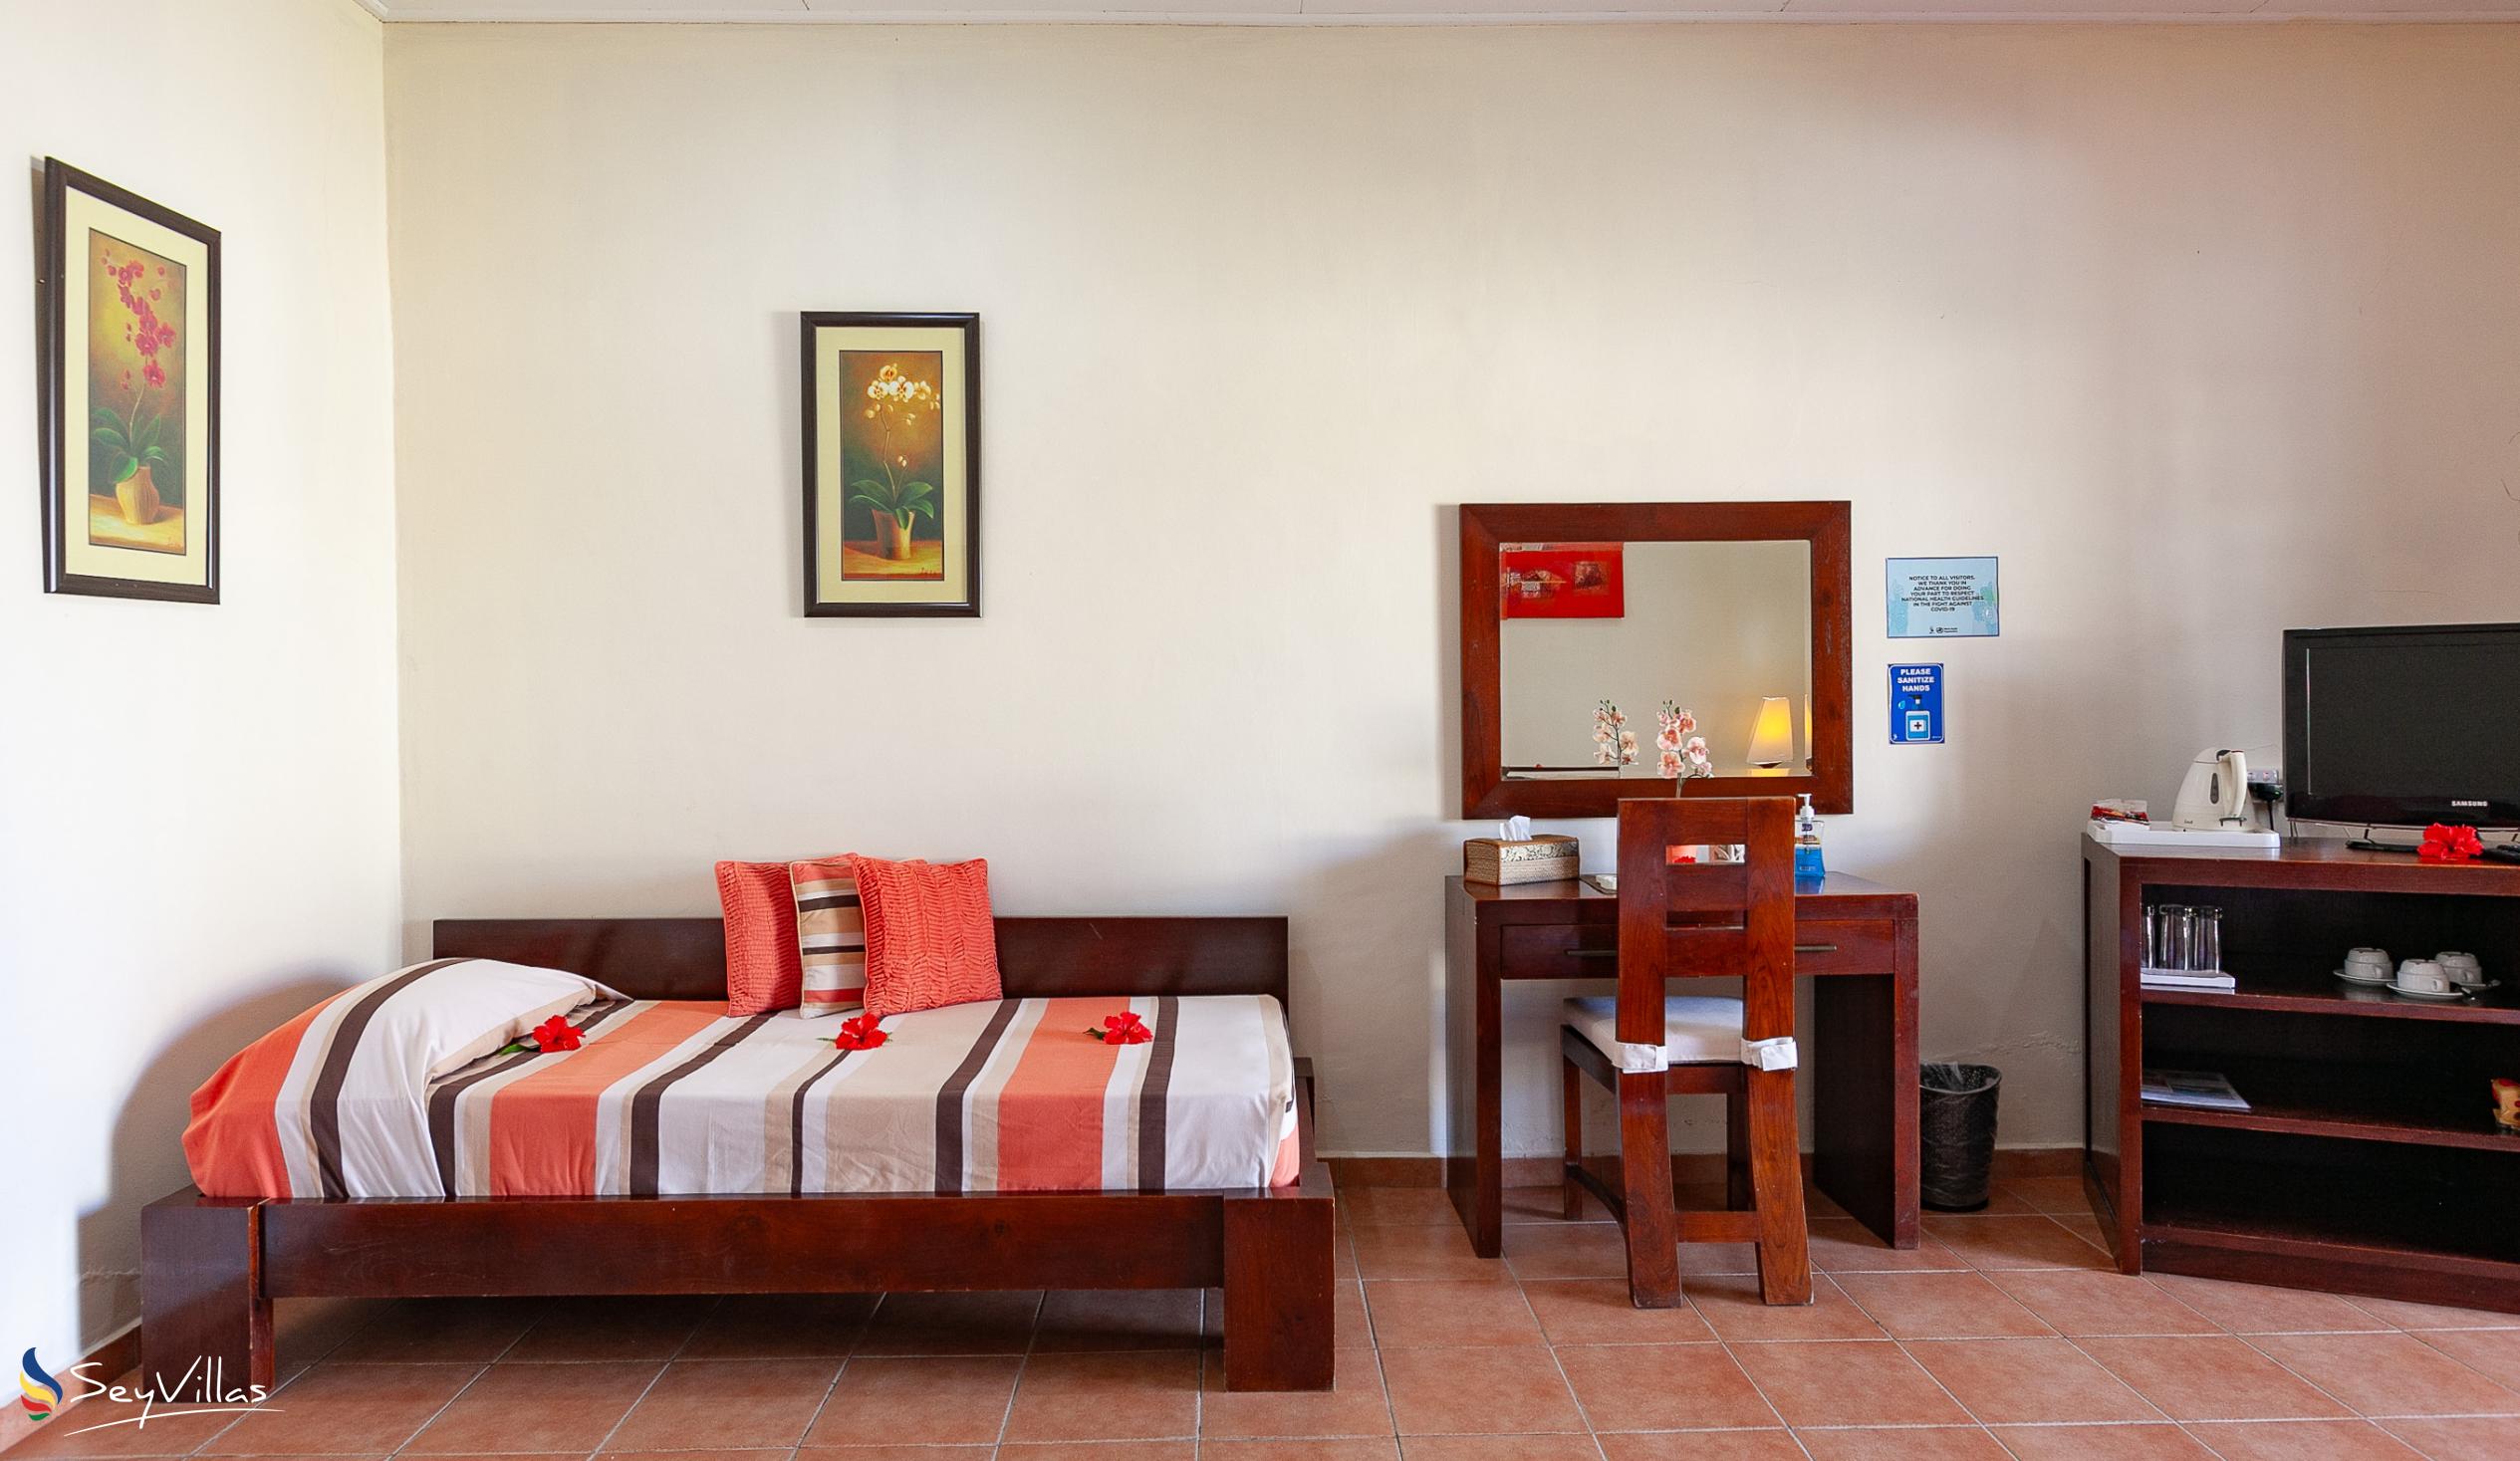 Photo 46: Britannia Hotel - Superior Family Room - Praslin (Seychelles)